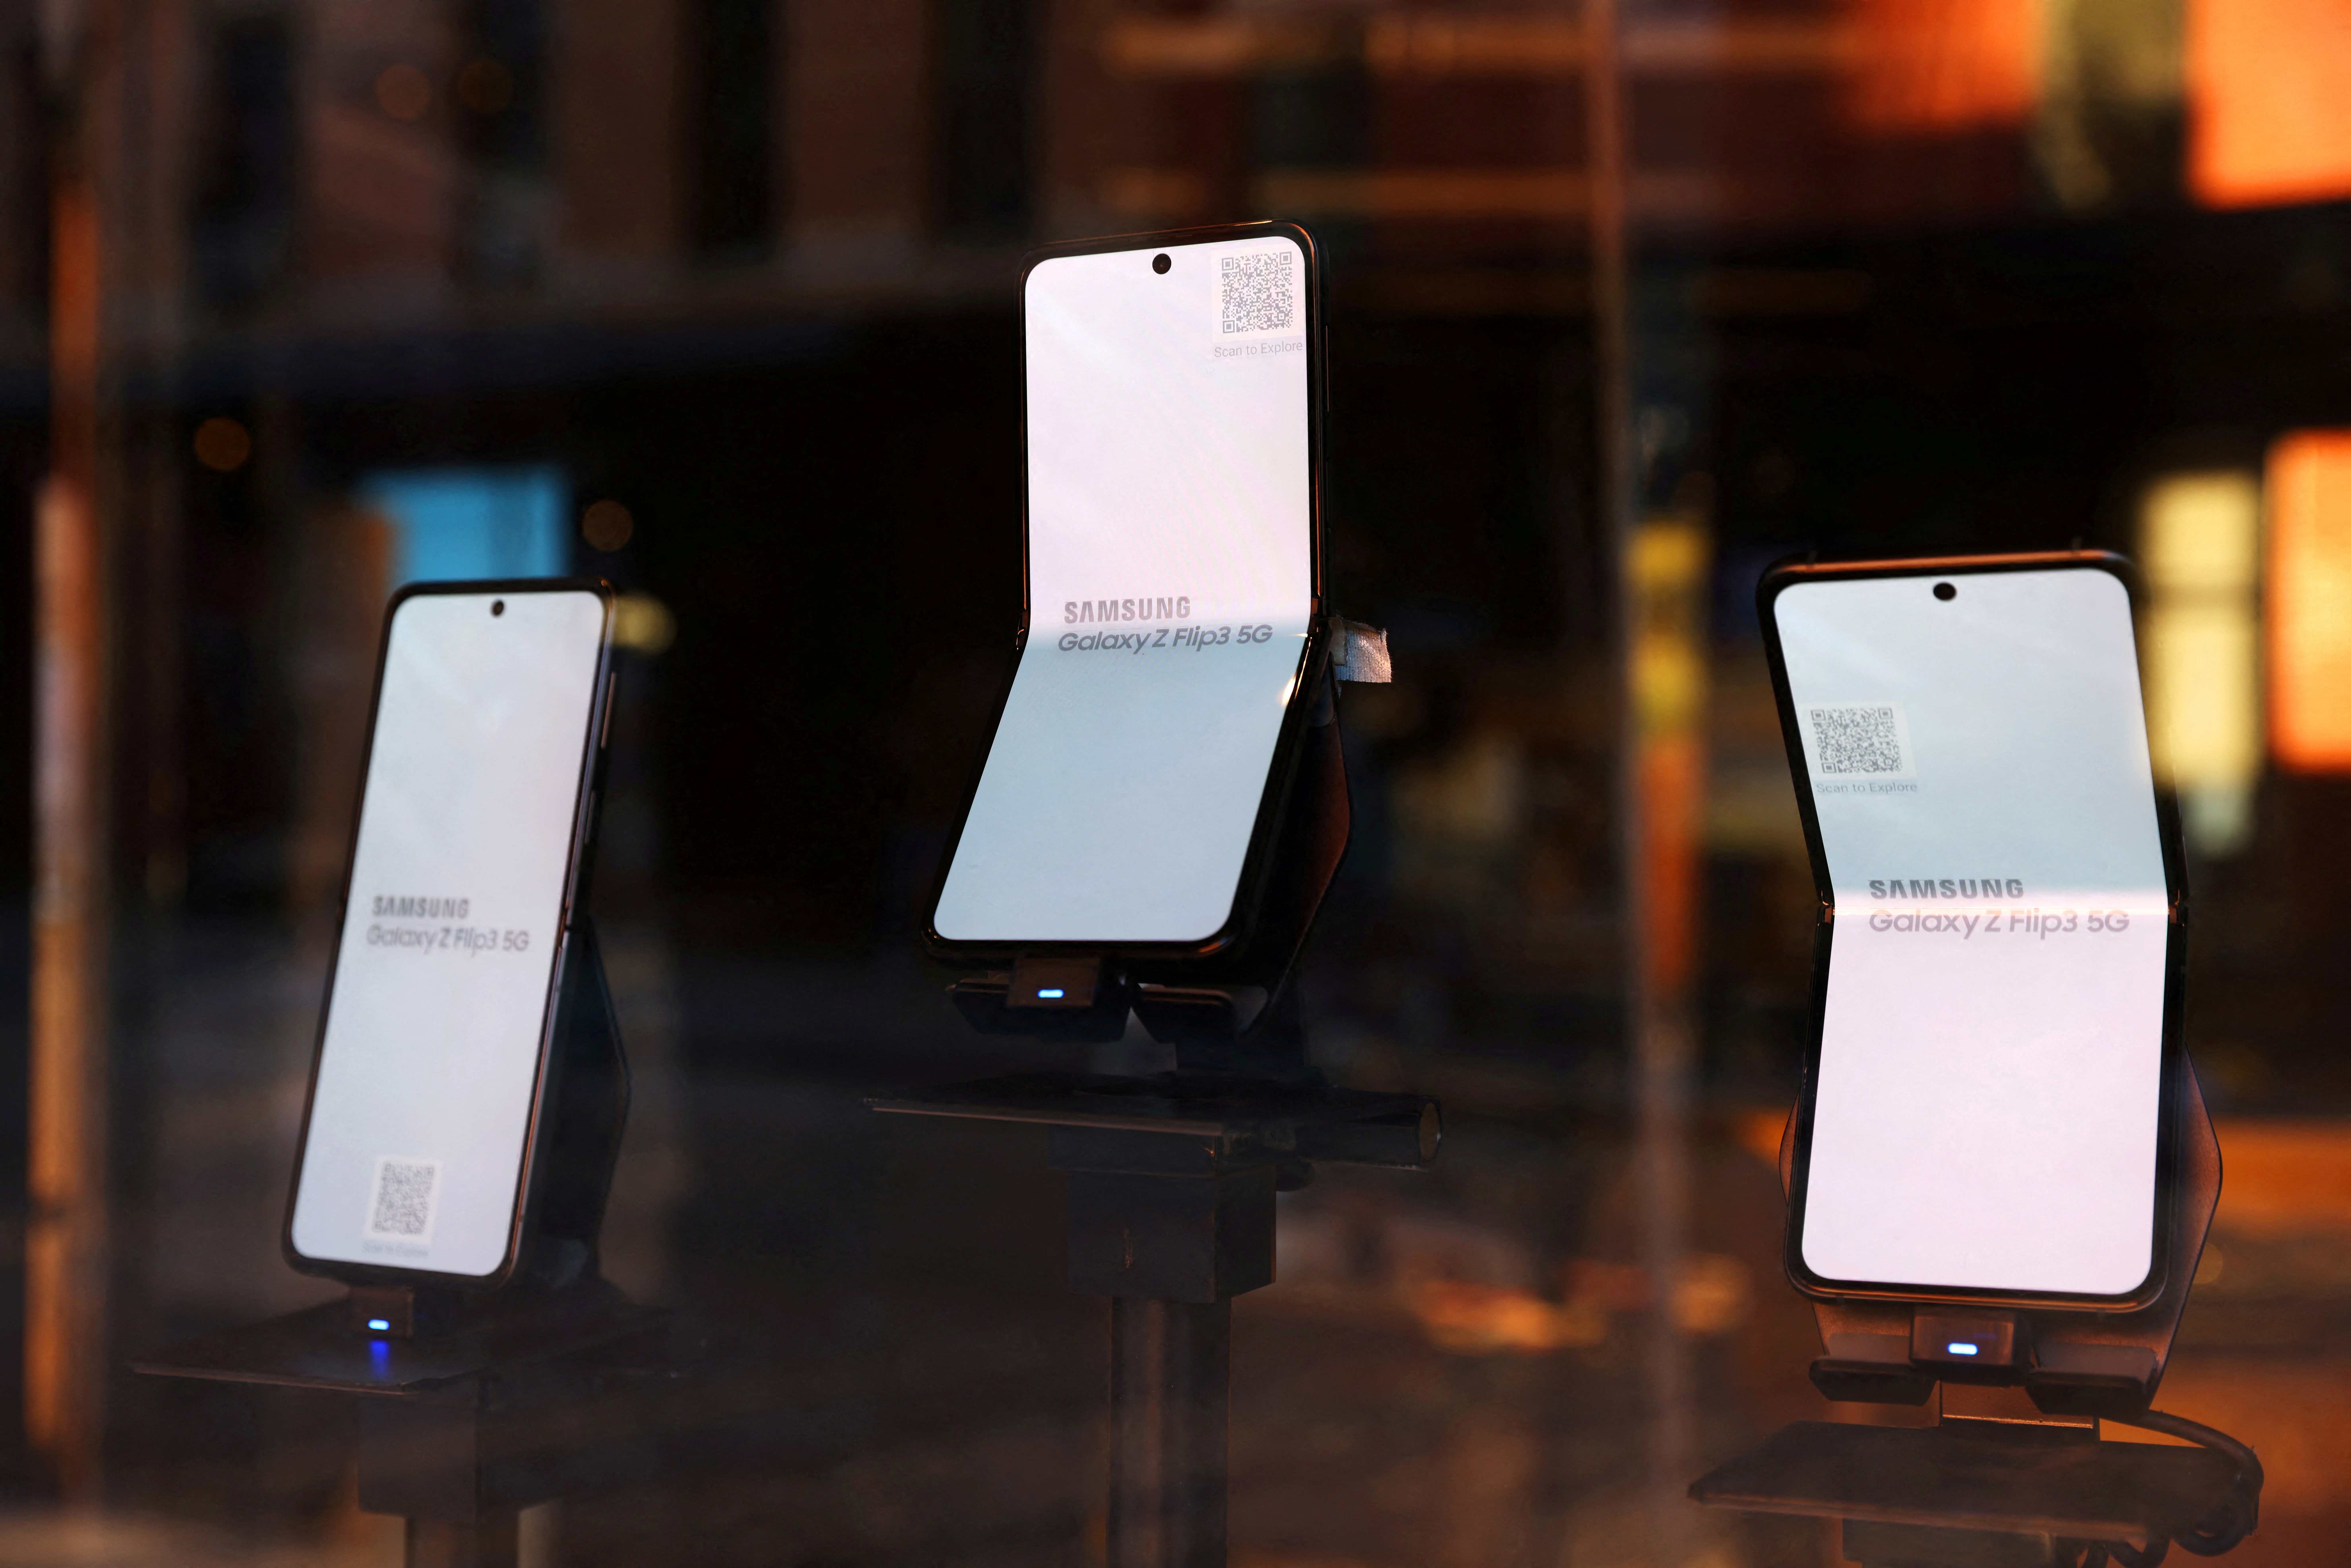 Samsung Galaxy Z Flip3 5G cell phones are seen displayed at Samsung 837 in Manhattan, New York City